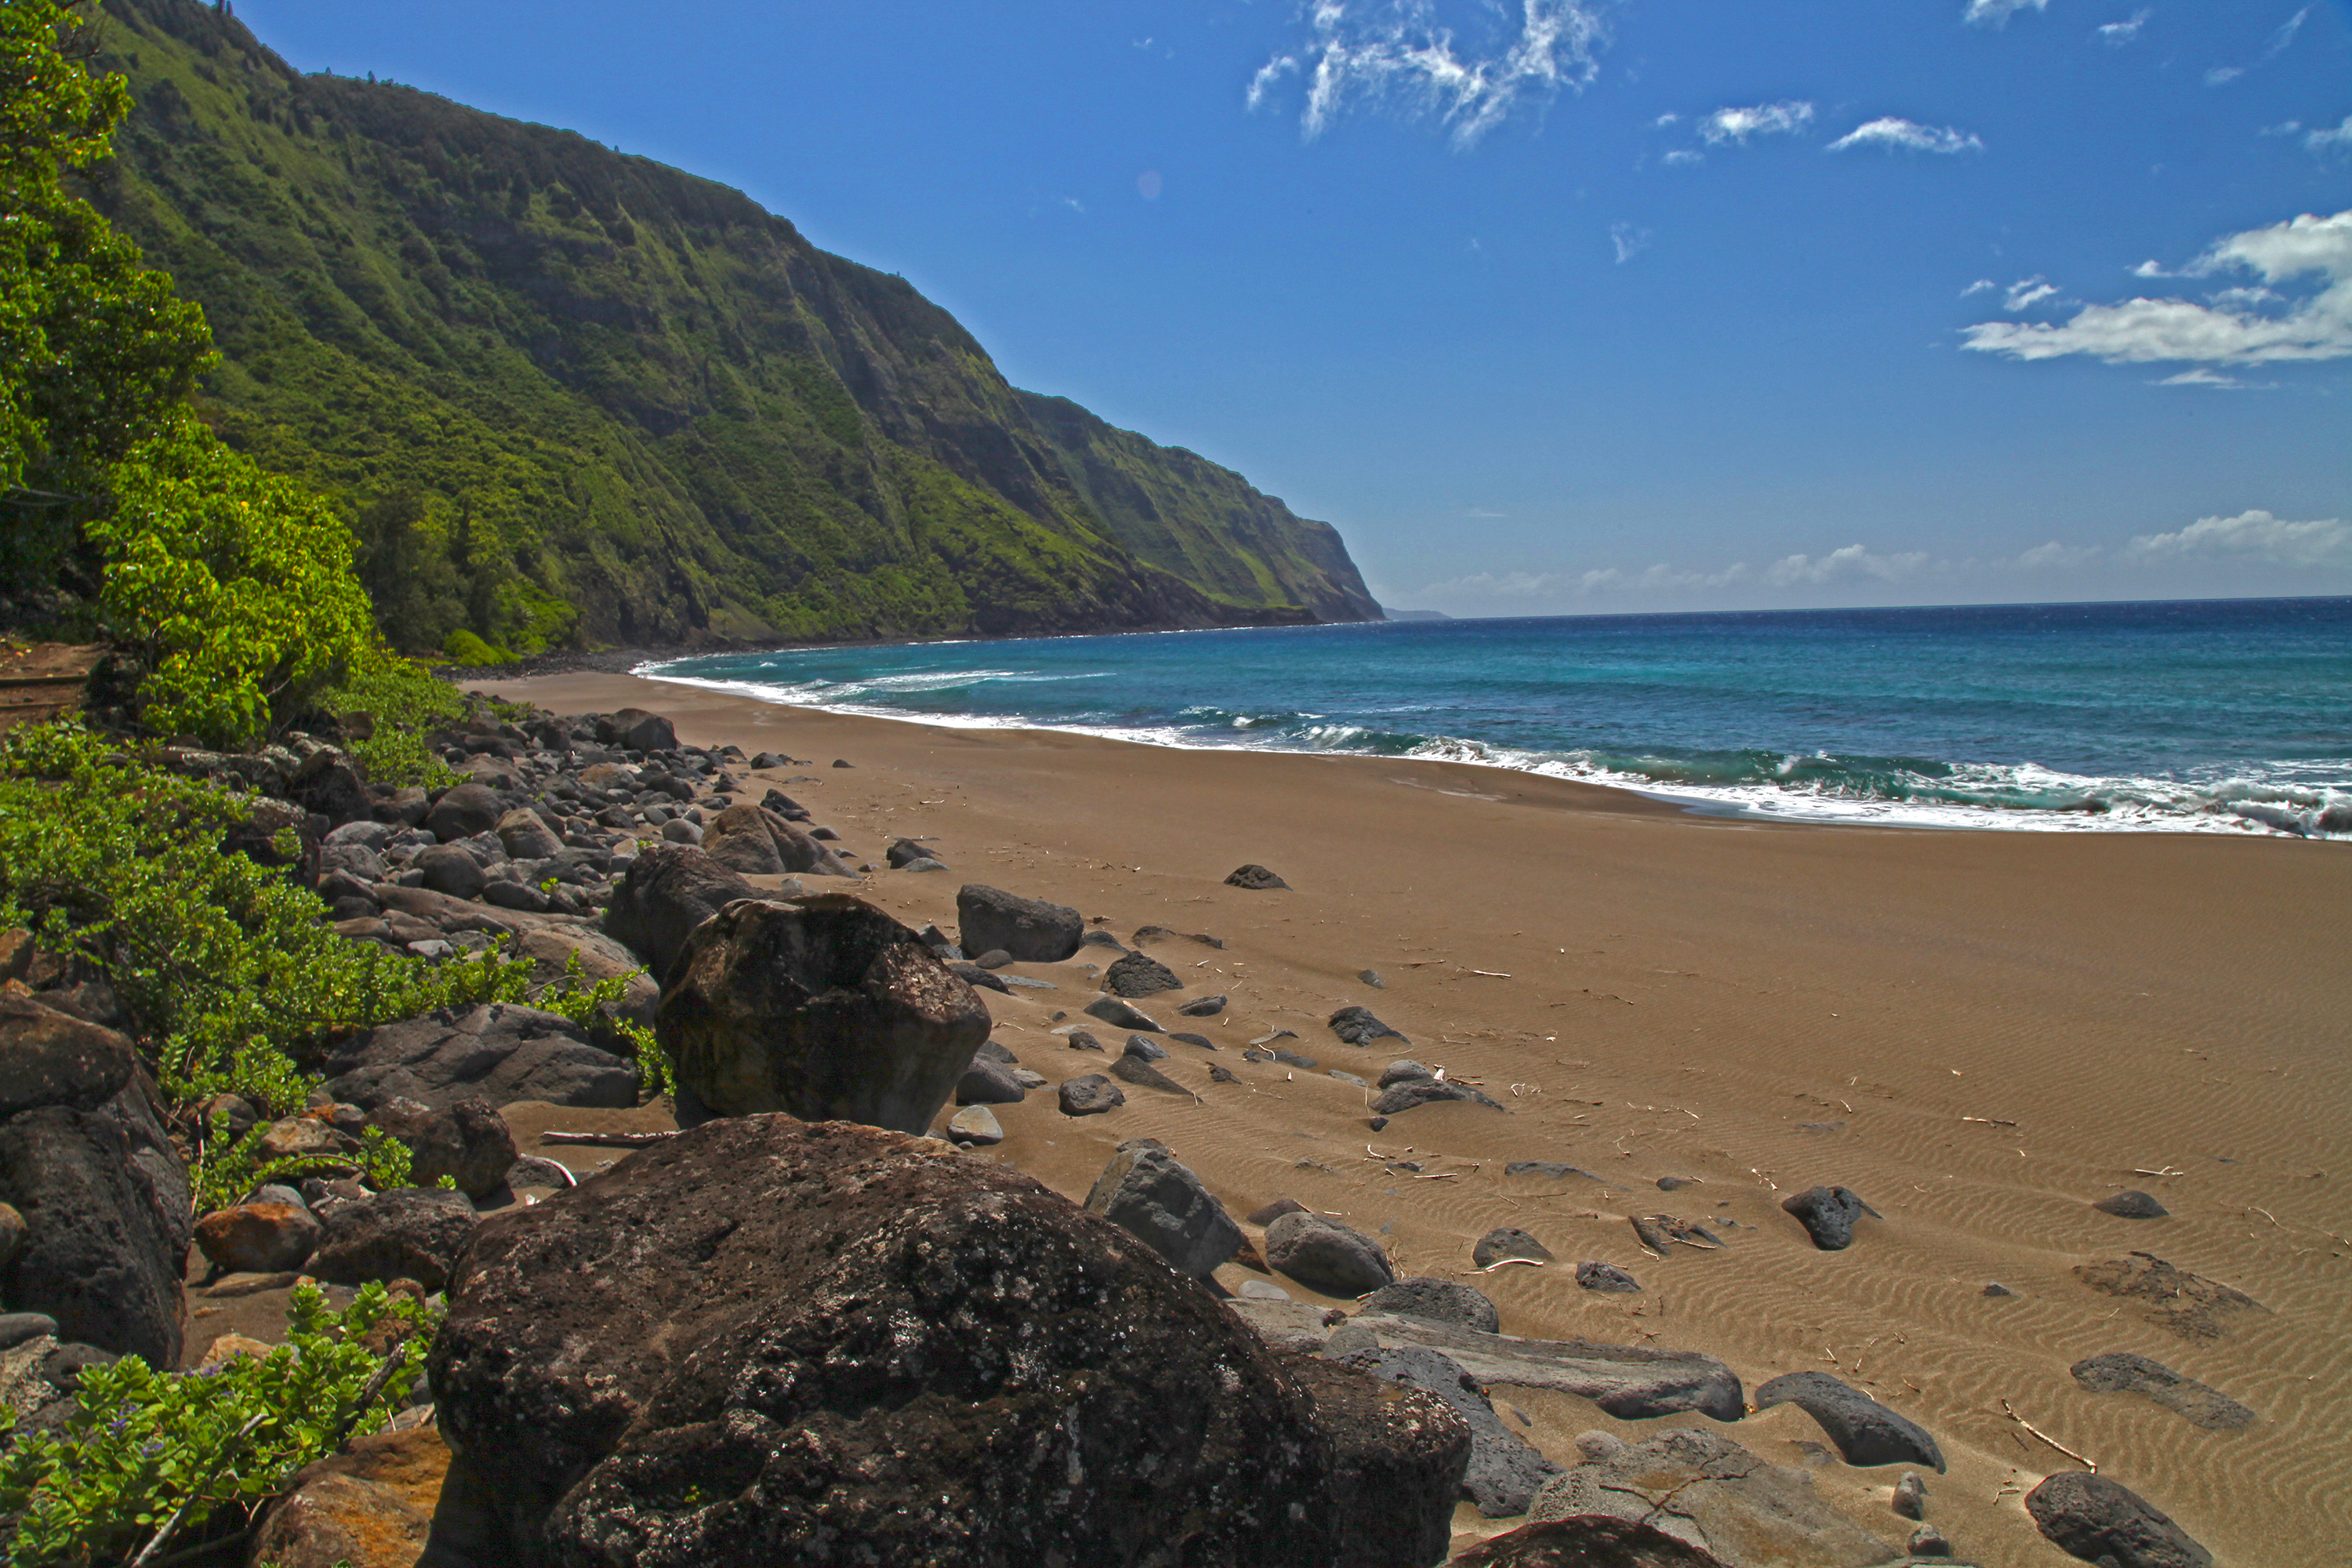 View of Black Sand Beach and Awahua Bay